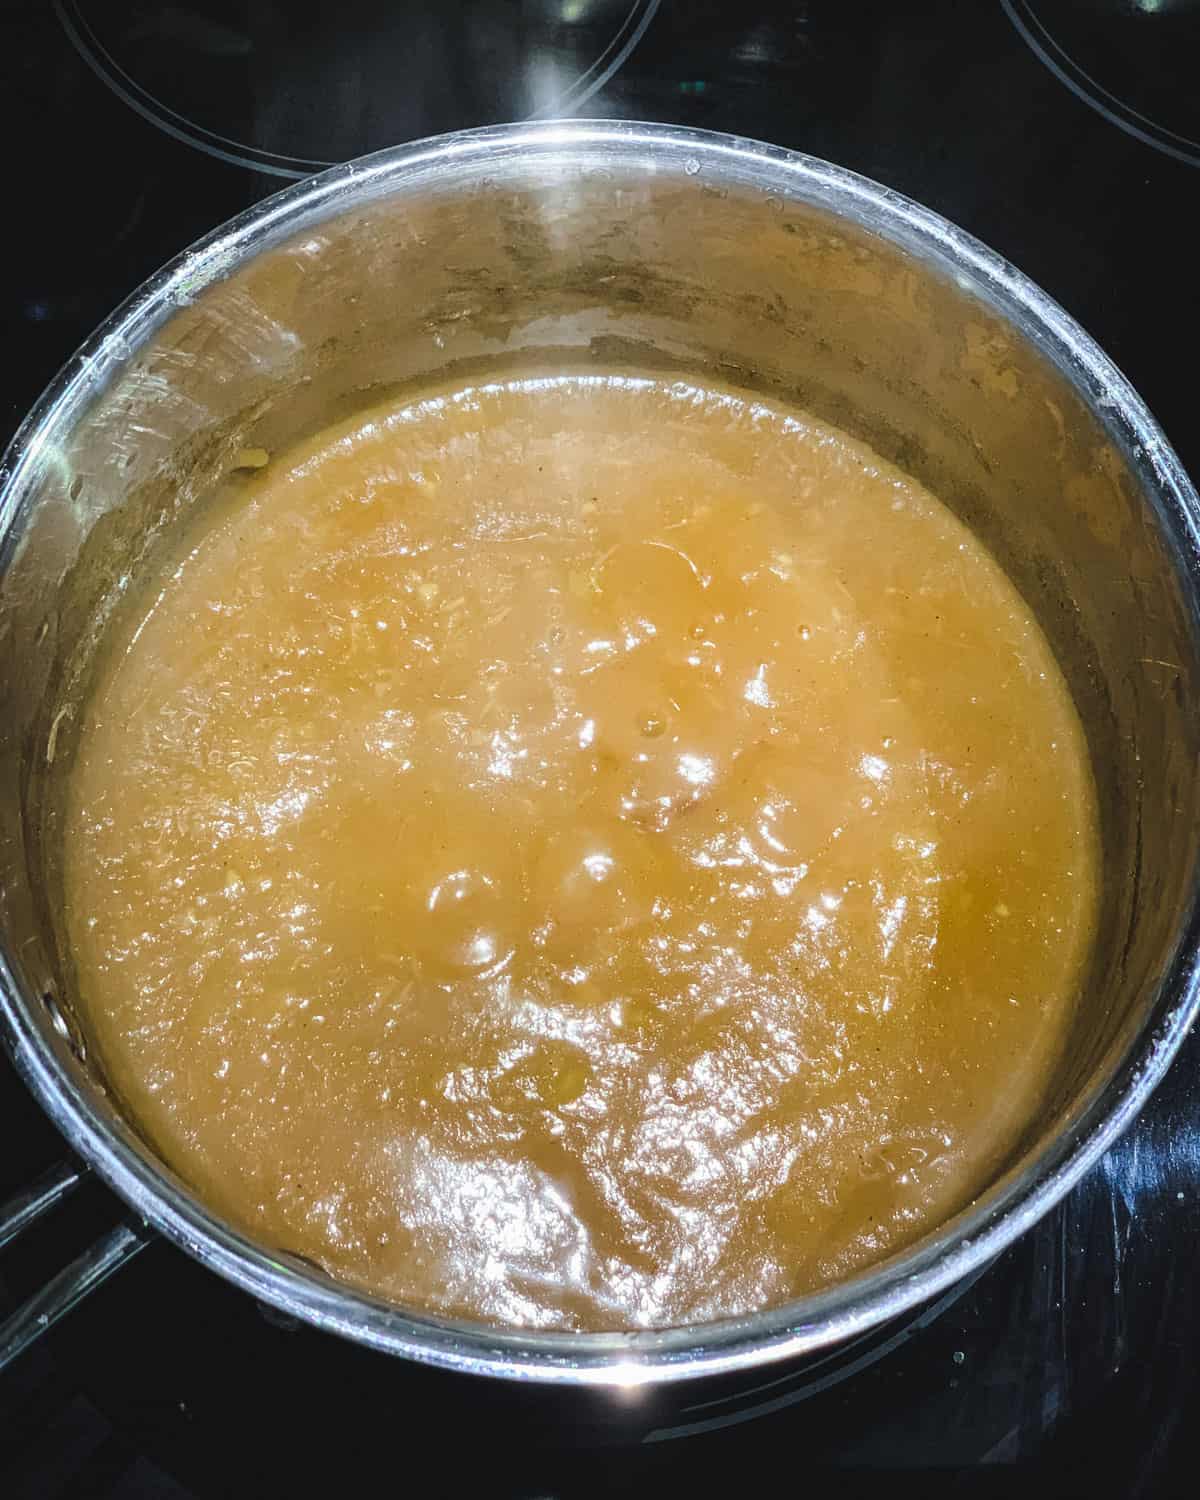 a pot boiling down the homemade apple butter